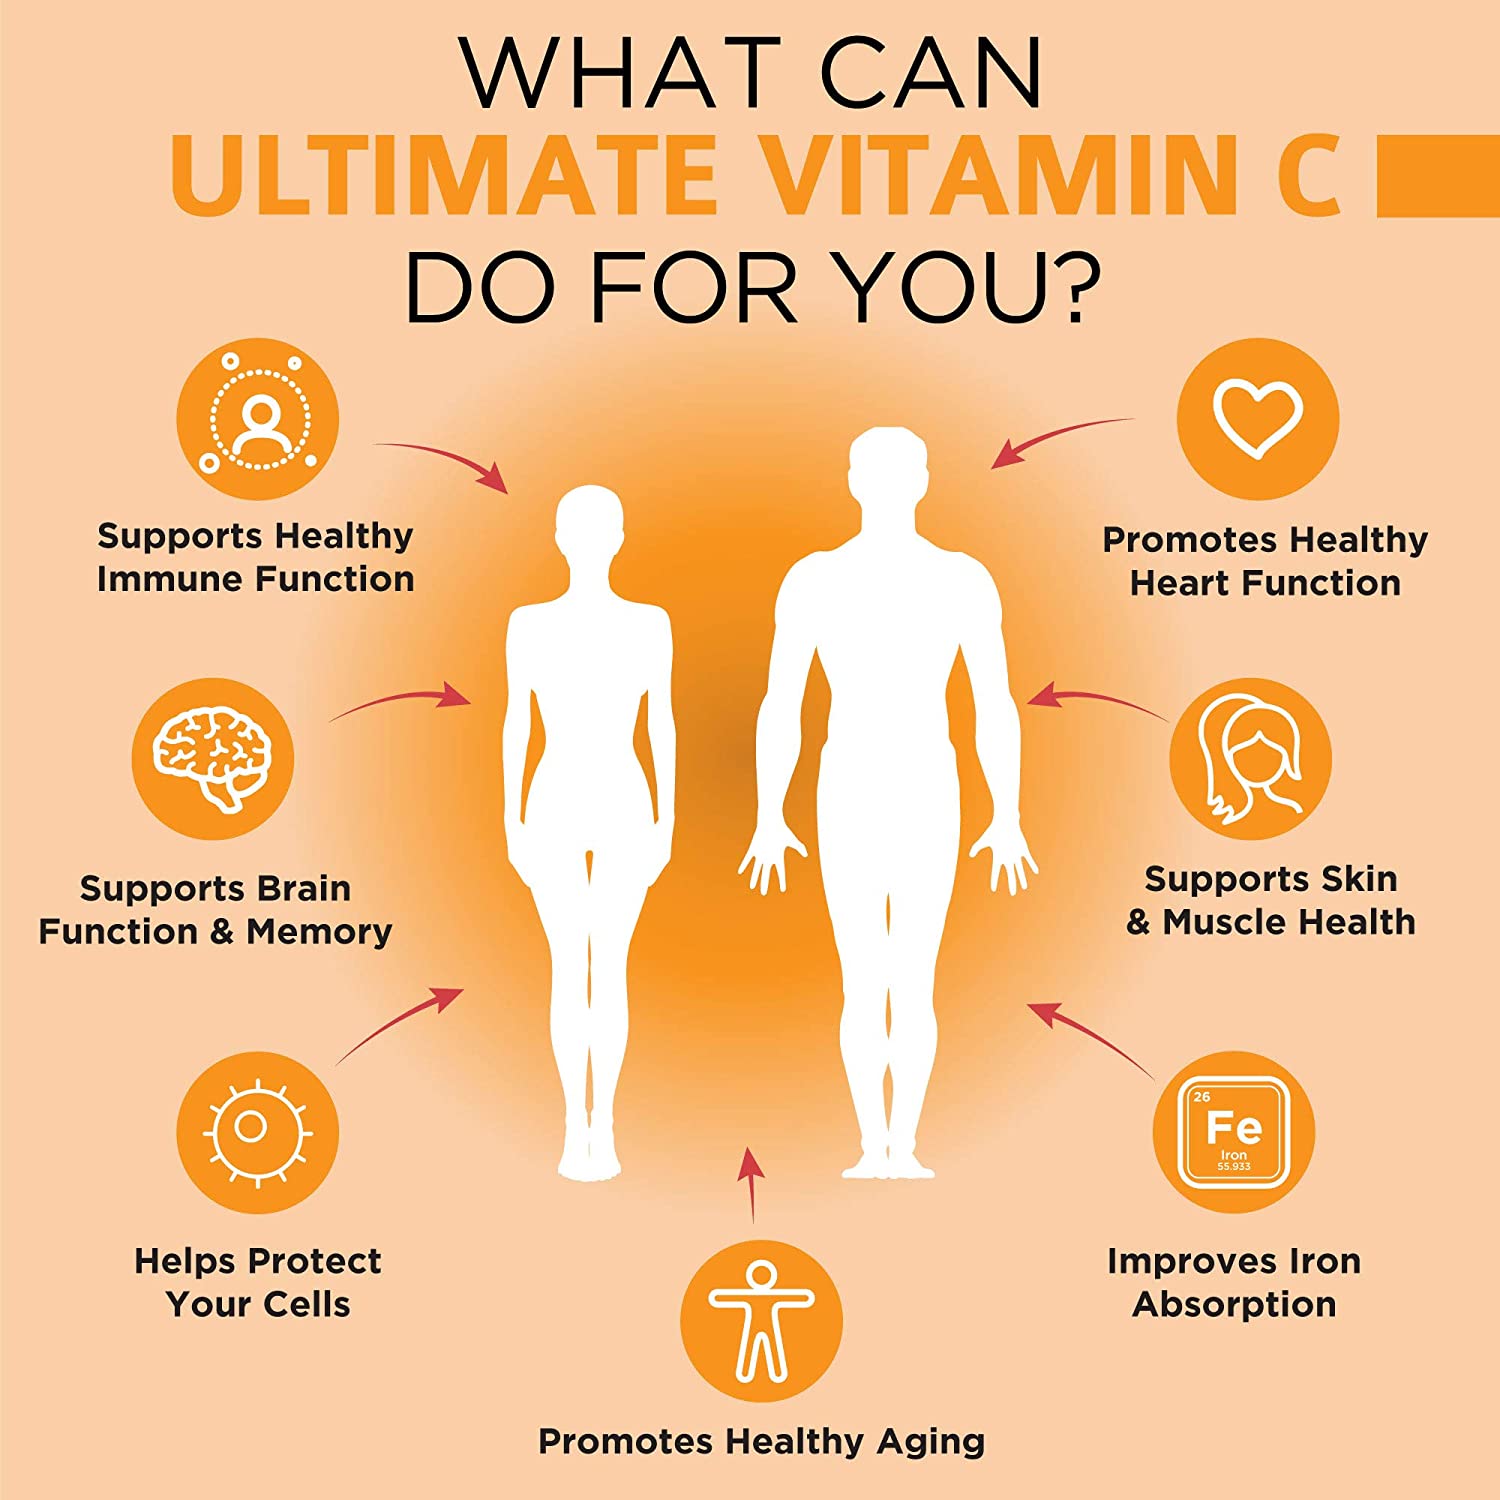 Ultimate Vitamin C 2000 mg with Full Servings of Zinc, Elderberry, & Vitamin D3